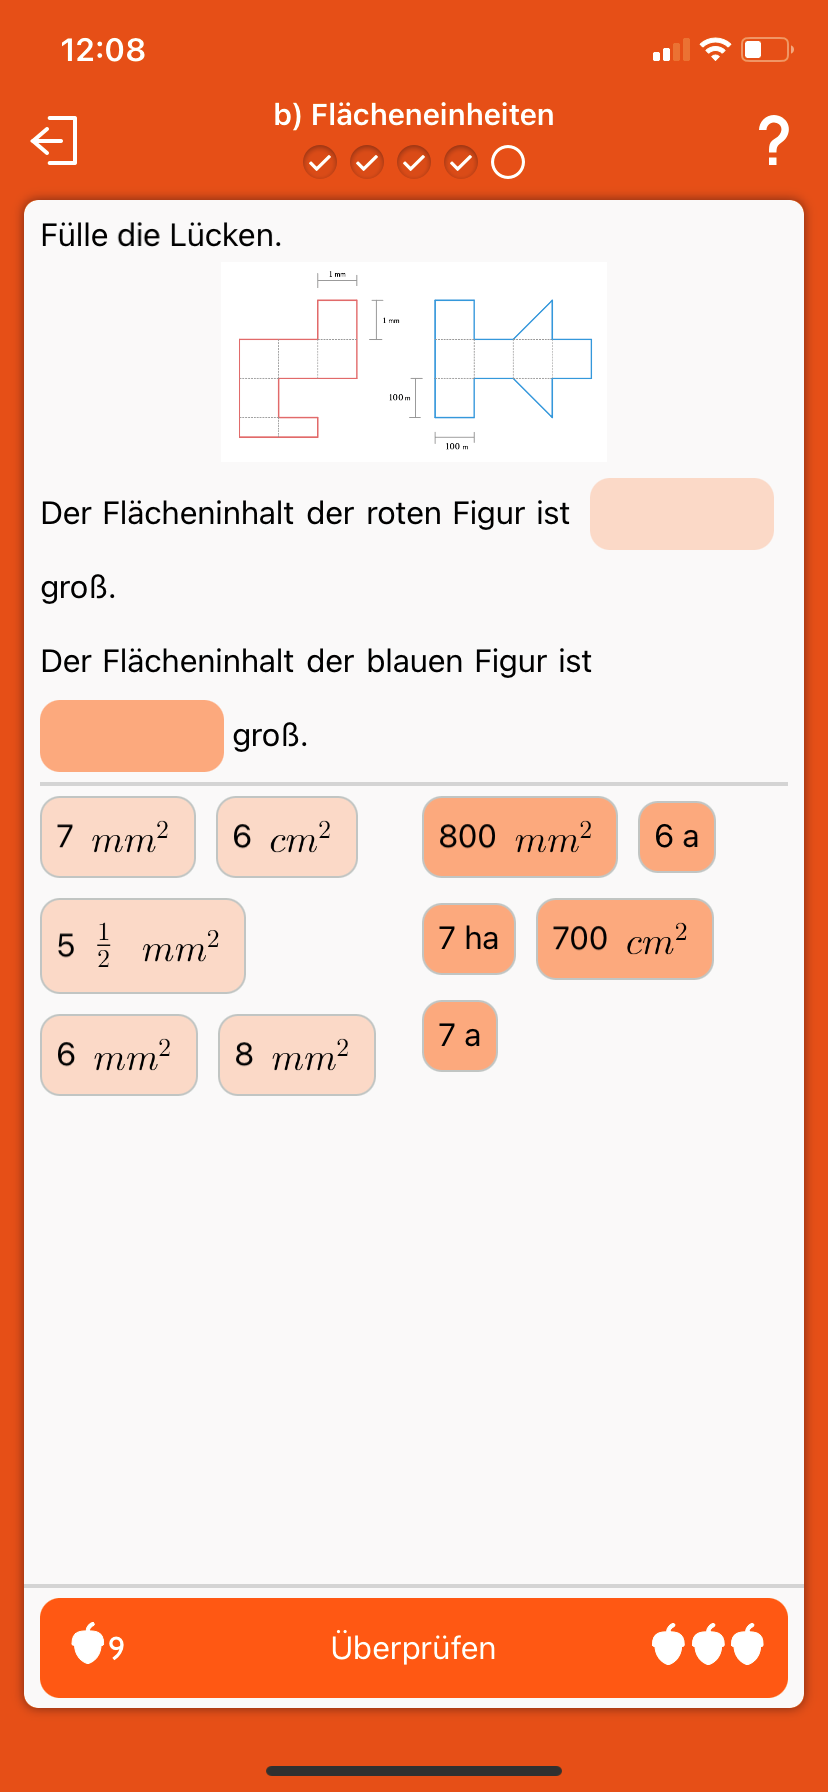 Fokus Mathematik 5 (Bayern, Gymnasium)